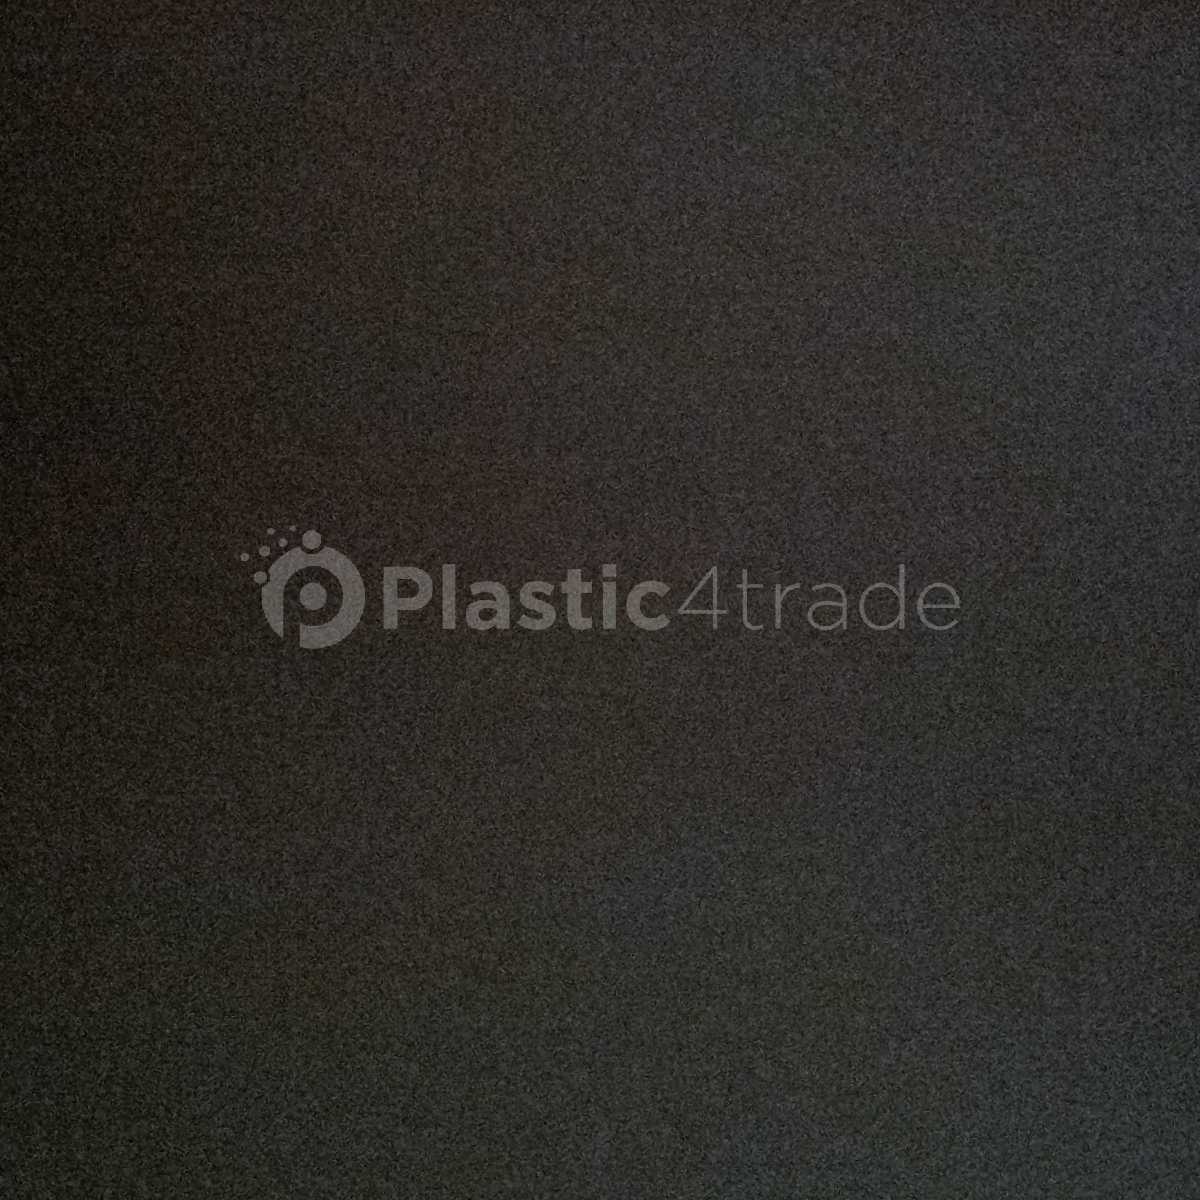 ALL PLASTIC LDPE Stock Lots Injection Molding gujarat india Plastic4trade